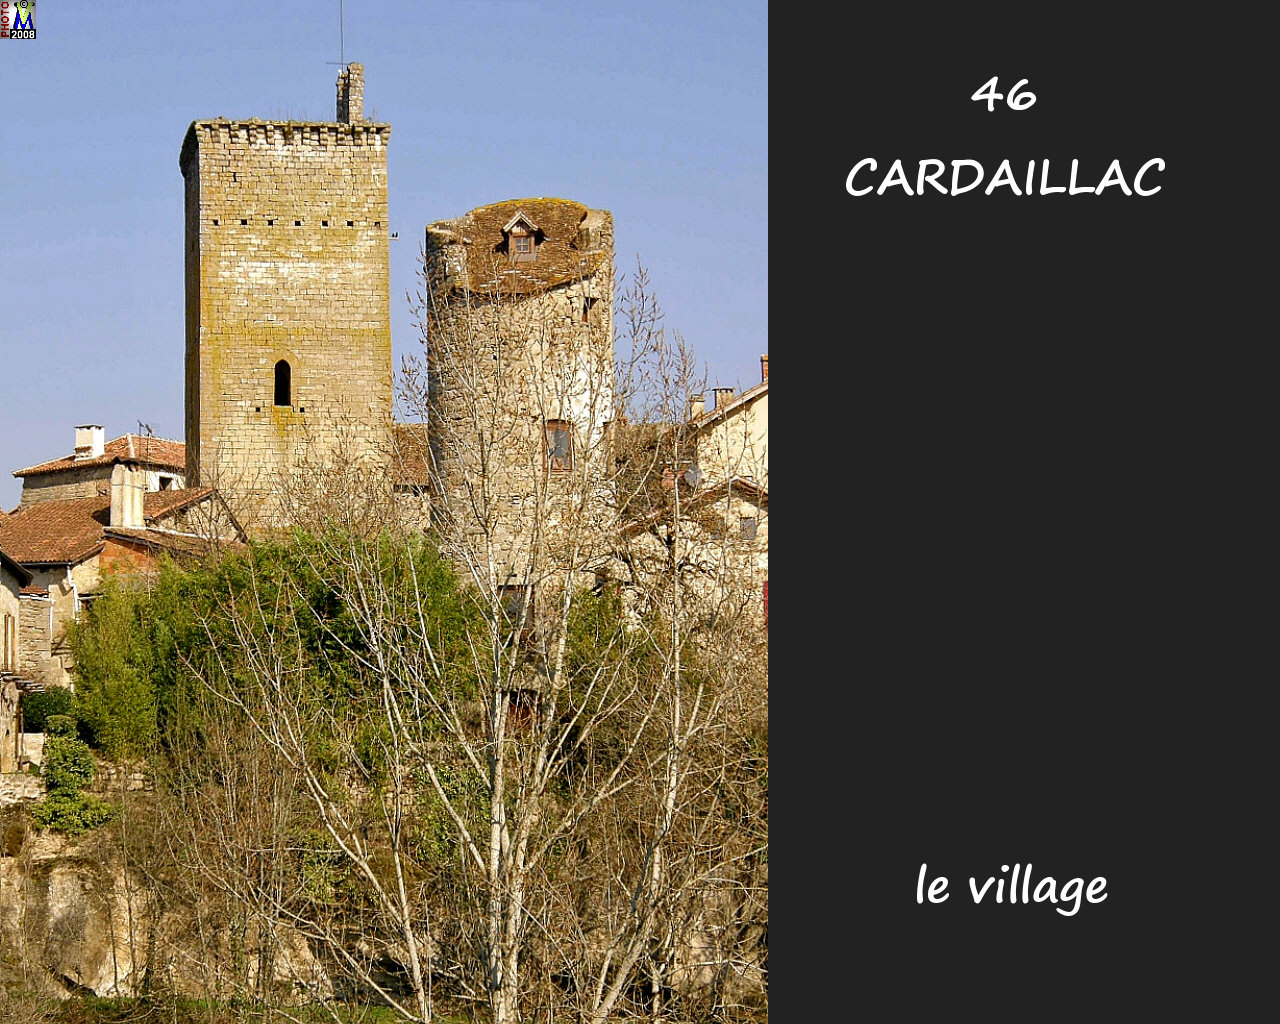 46CARDAILLAC_village_188.jpg